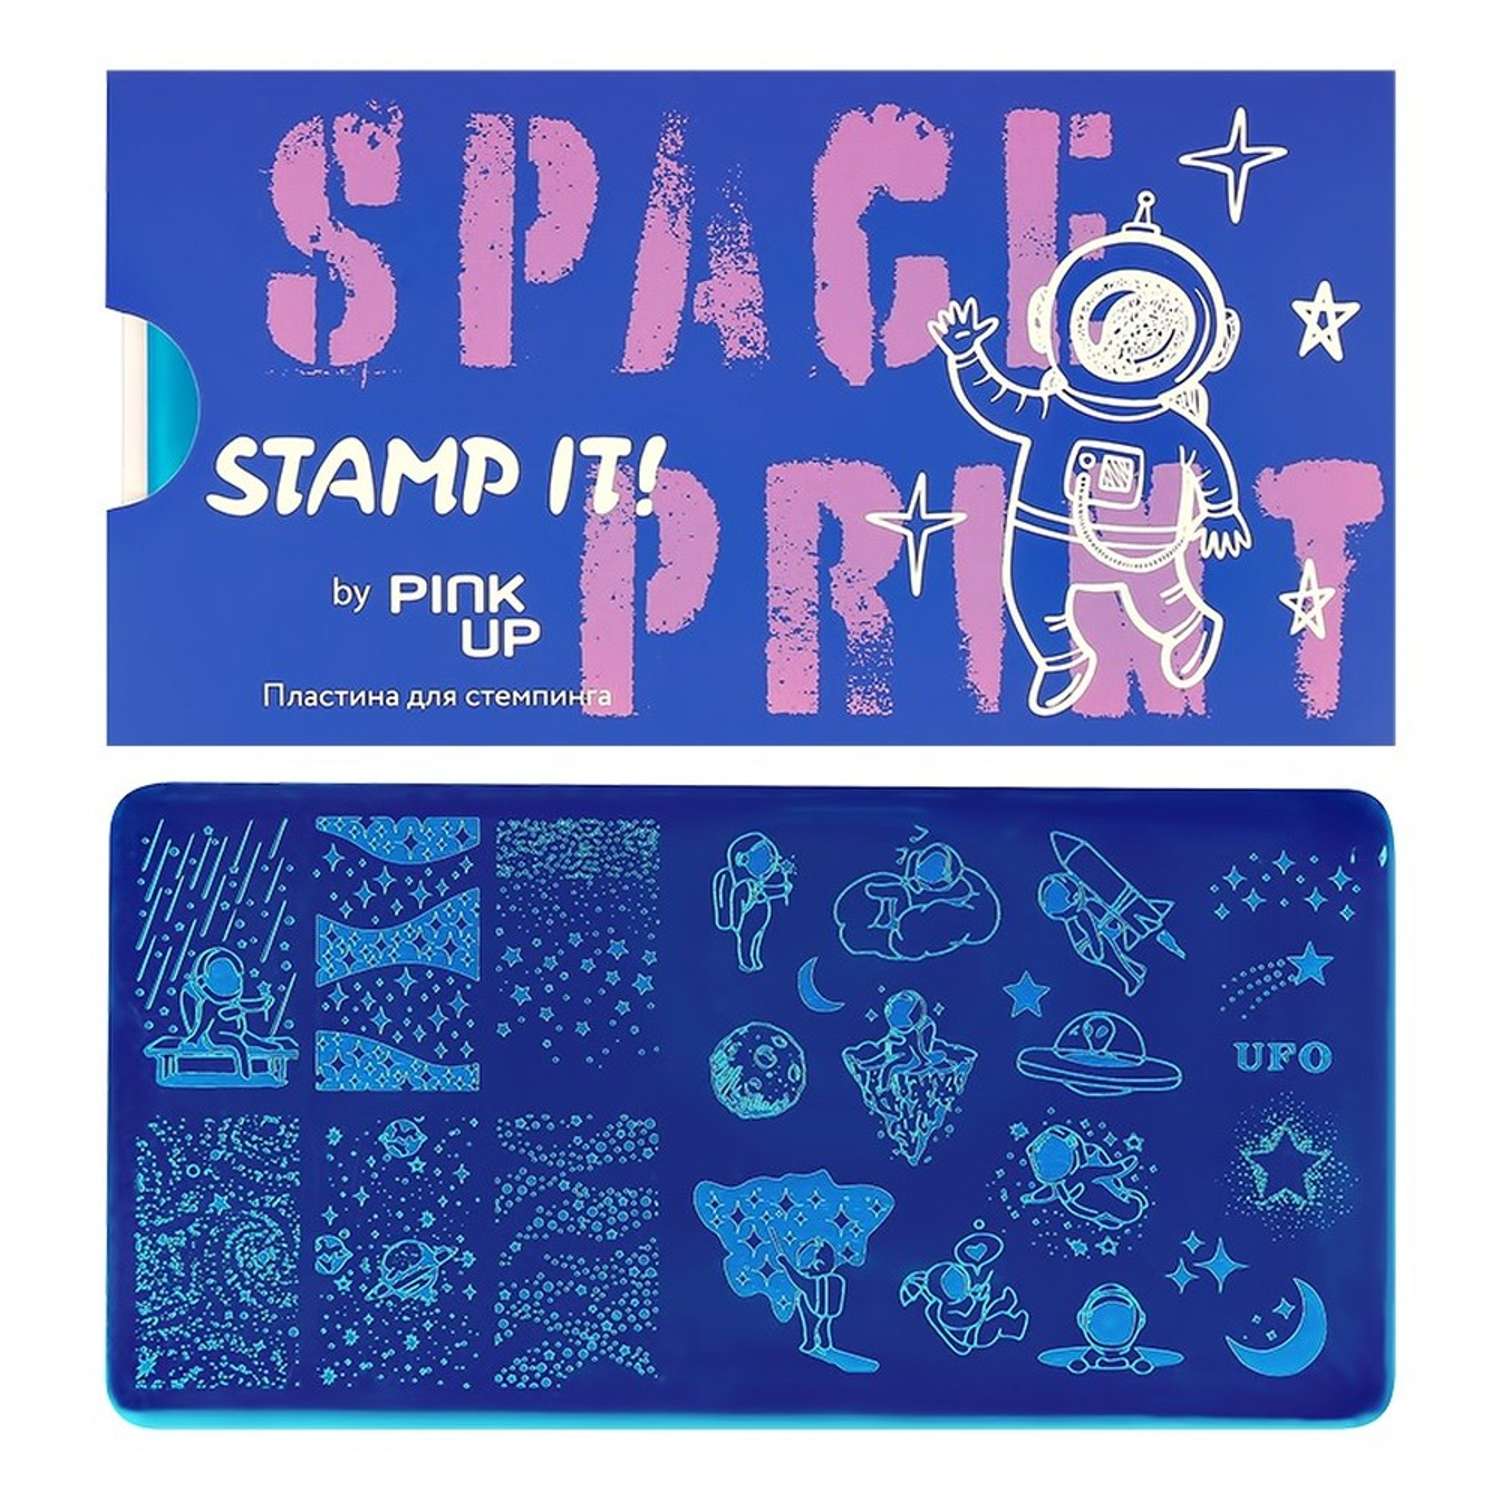 Пластина для стемпинга Pink Up stamp it! space print - фото 3